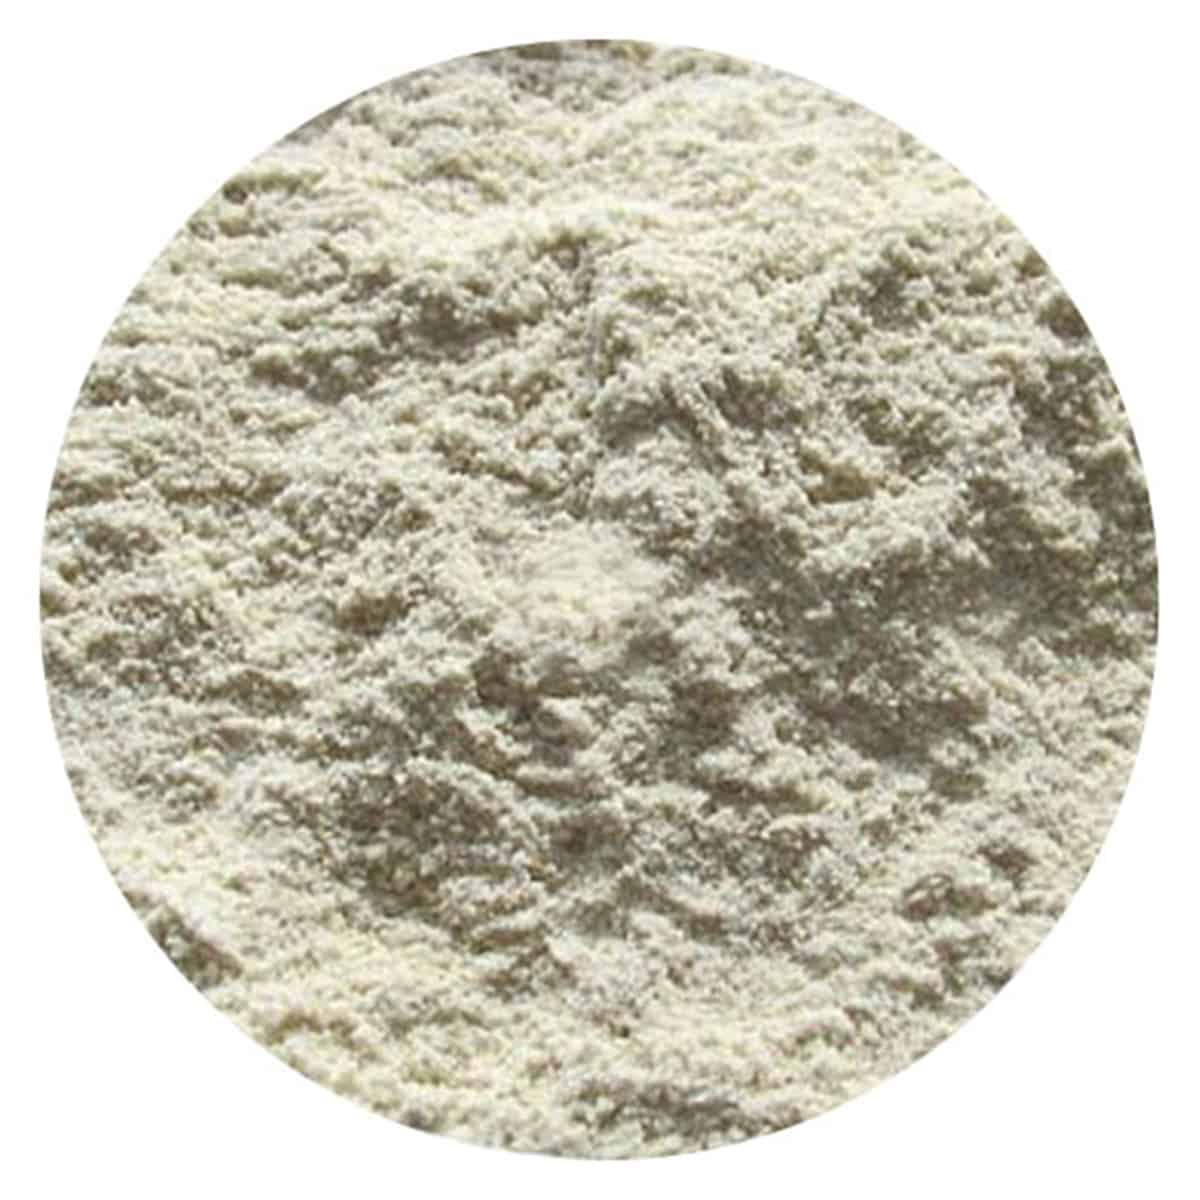 Buy IAG Foods Rye Flour - 450 gm